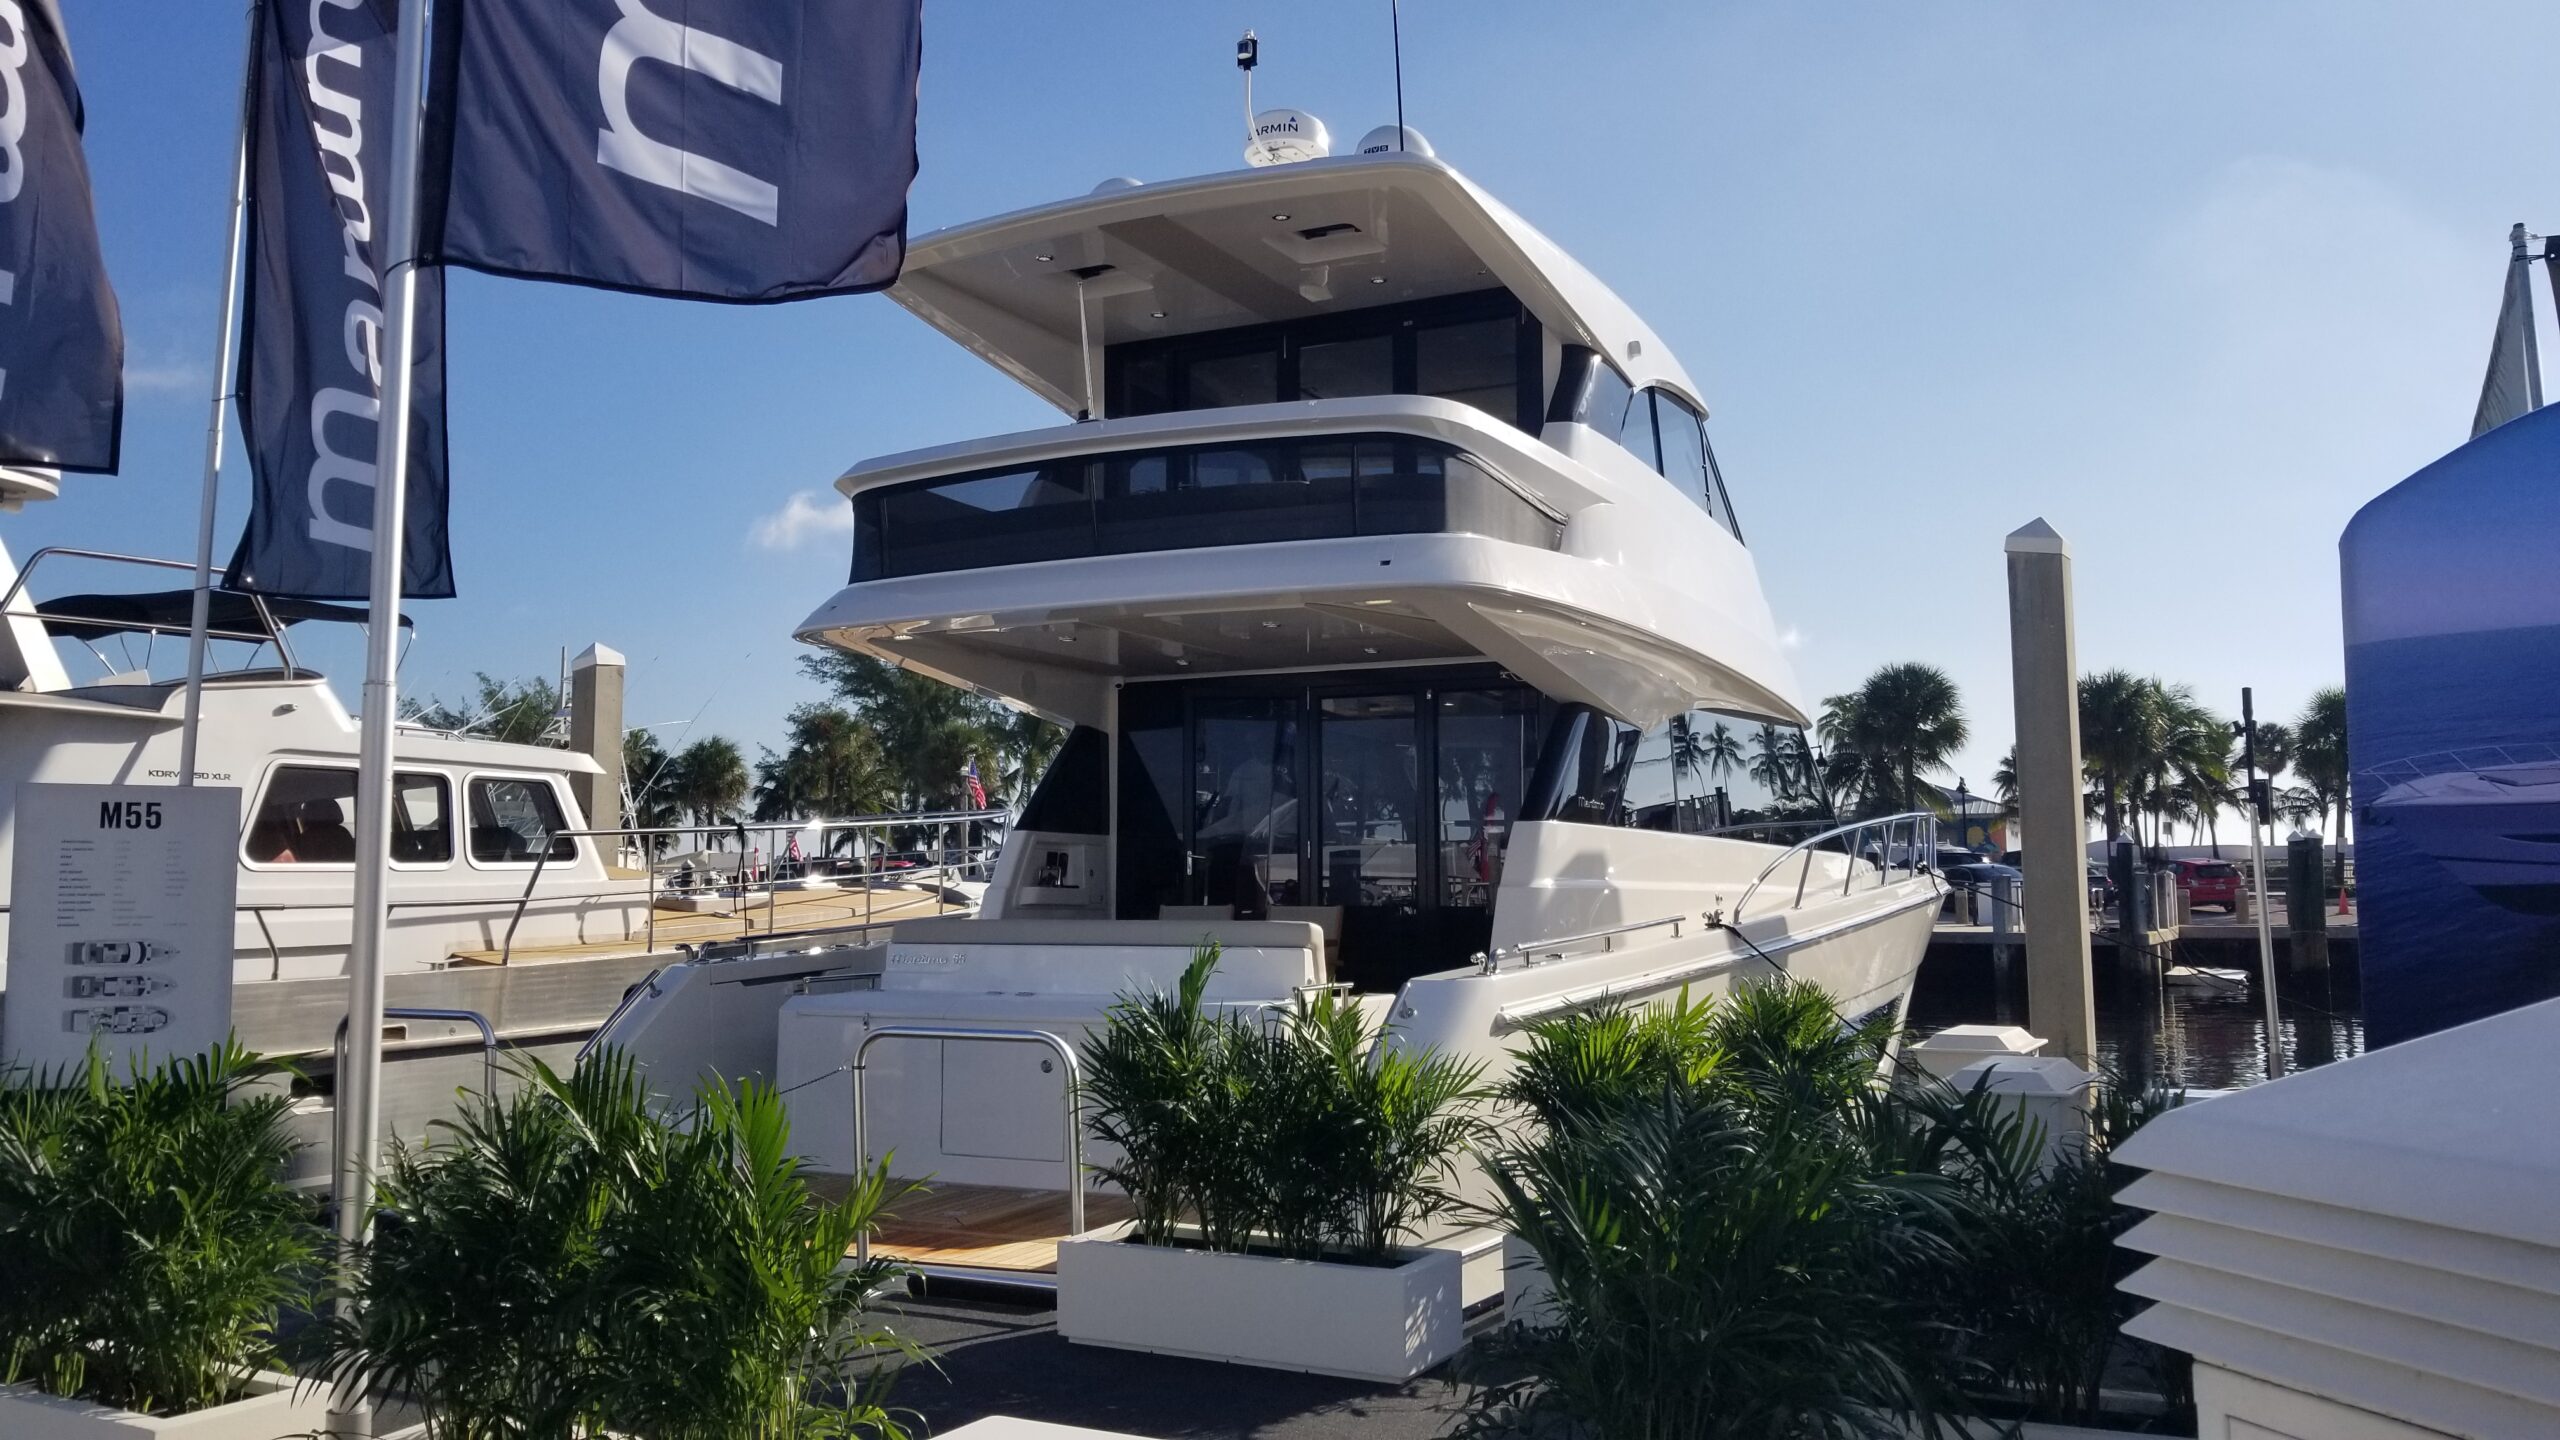 Maritimo boat at Fort Lauderdale International Boat Show 2021